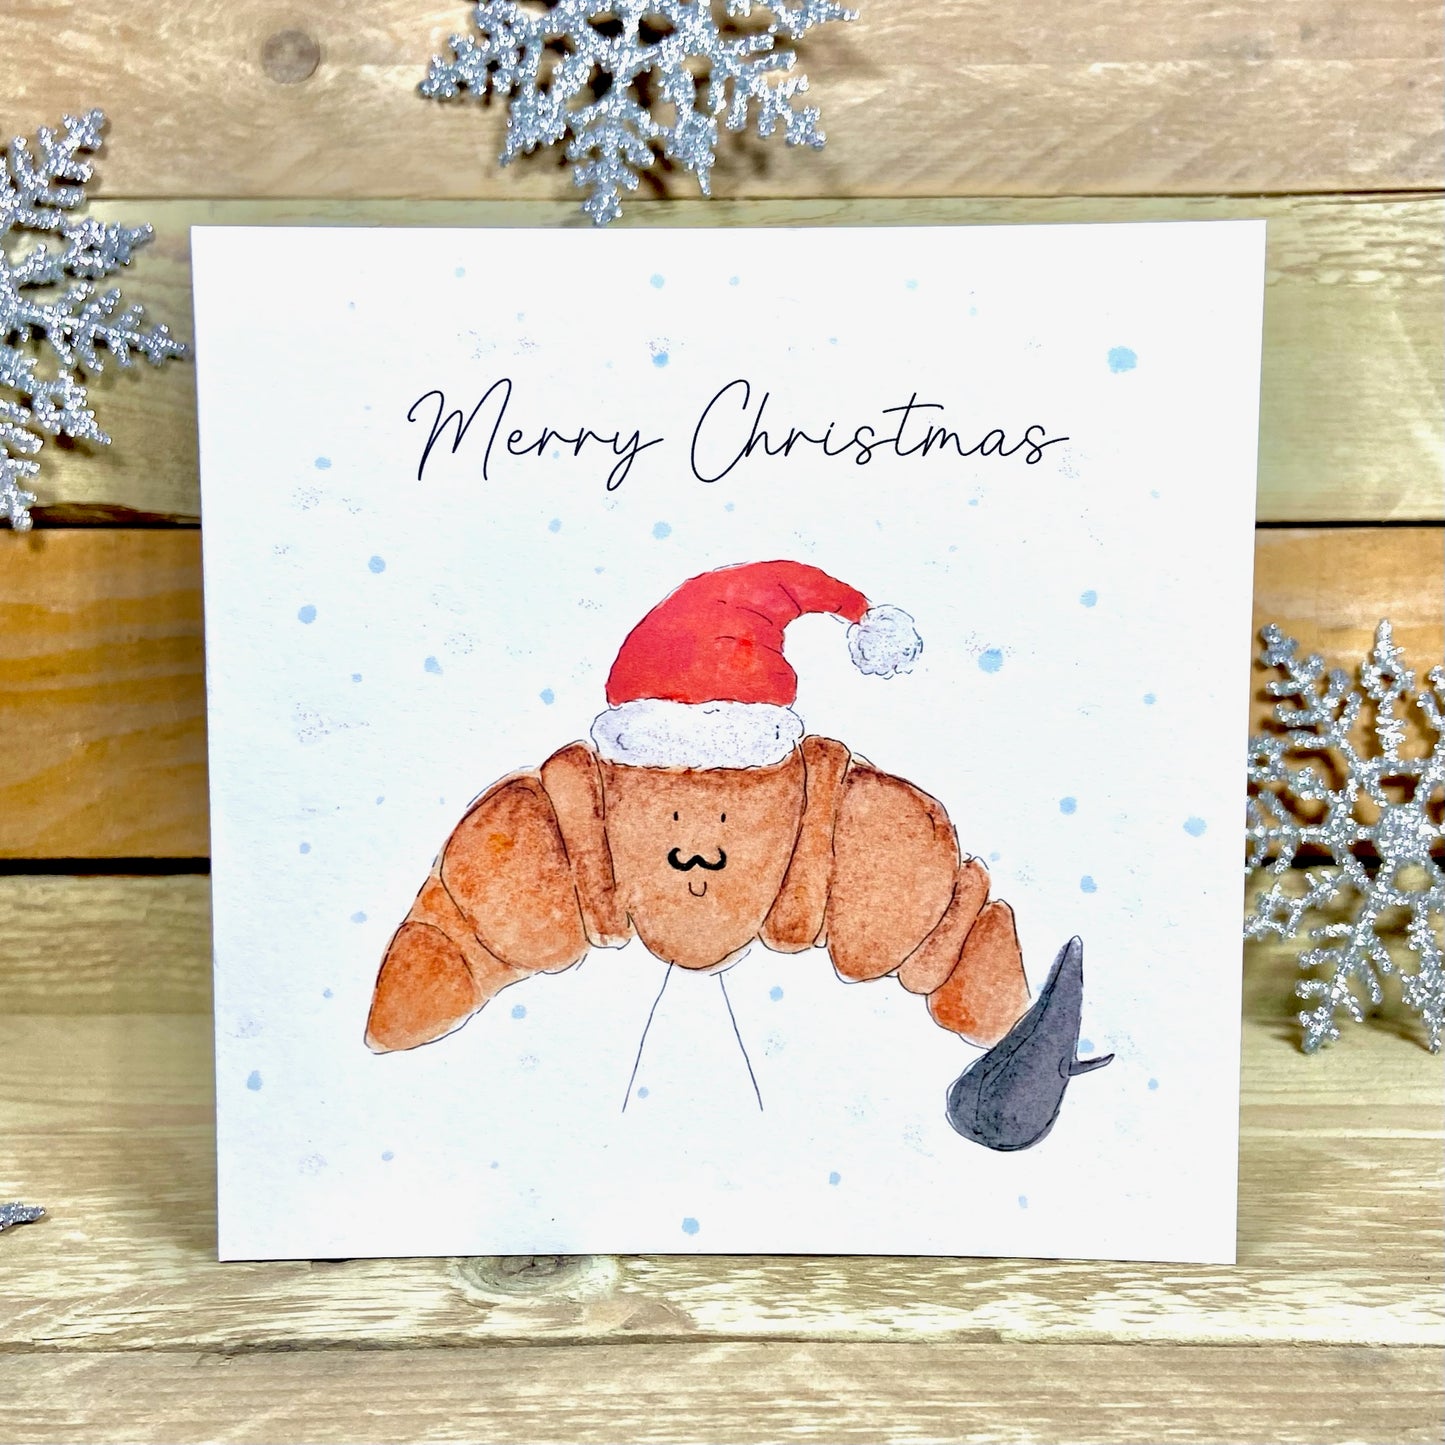 Joyeux Noel Croissant Christmas Card